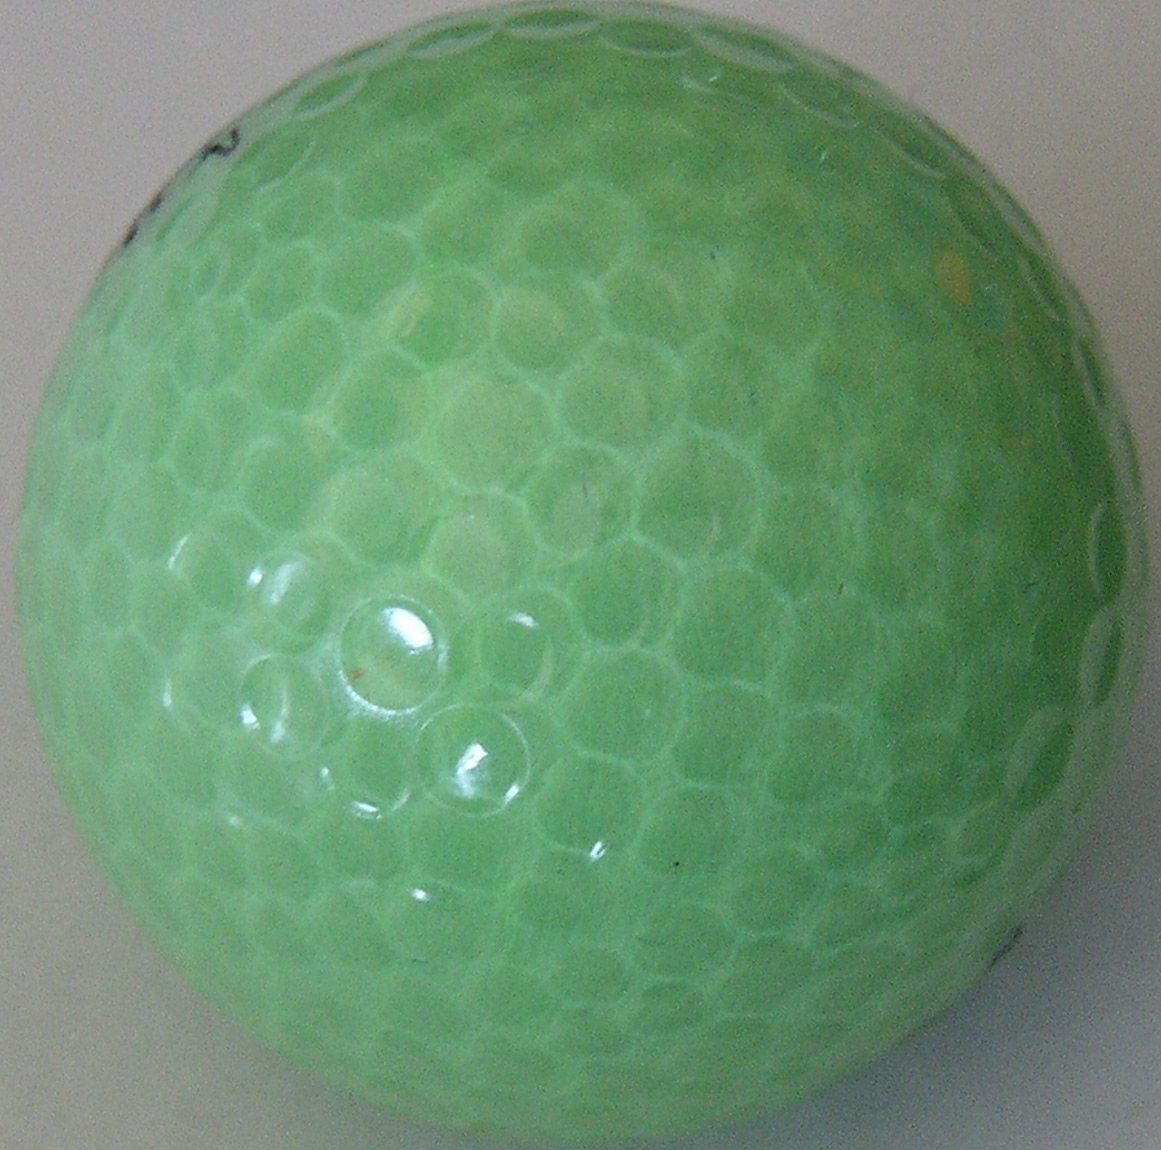 Greenball